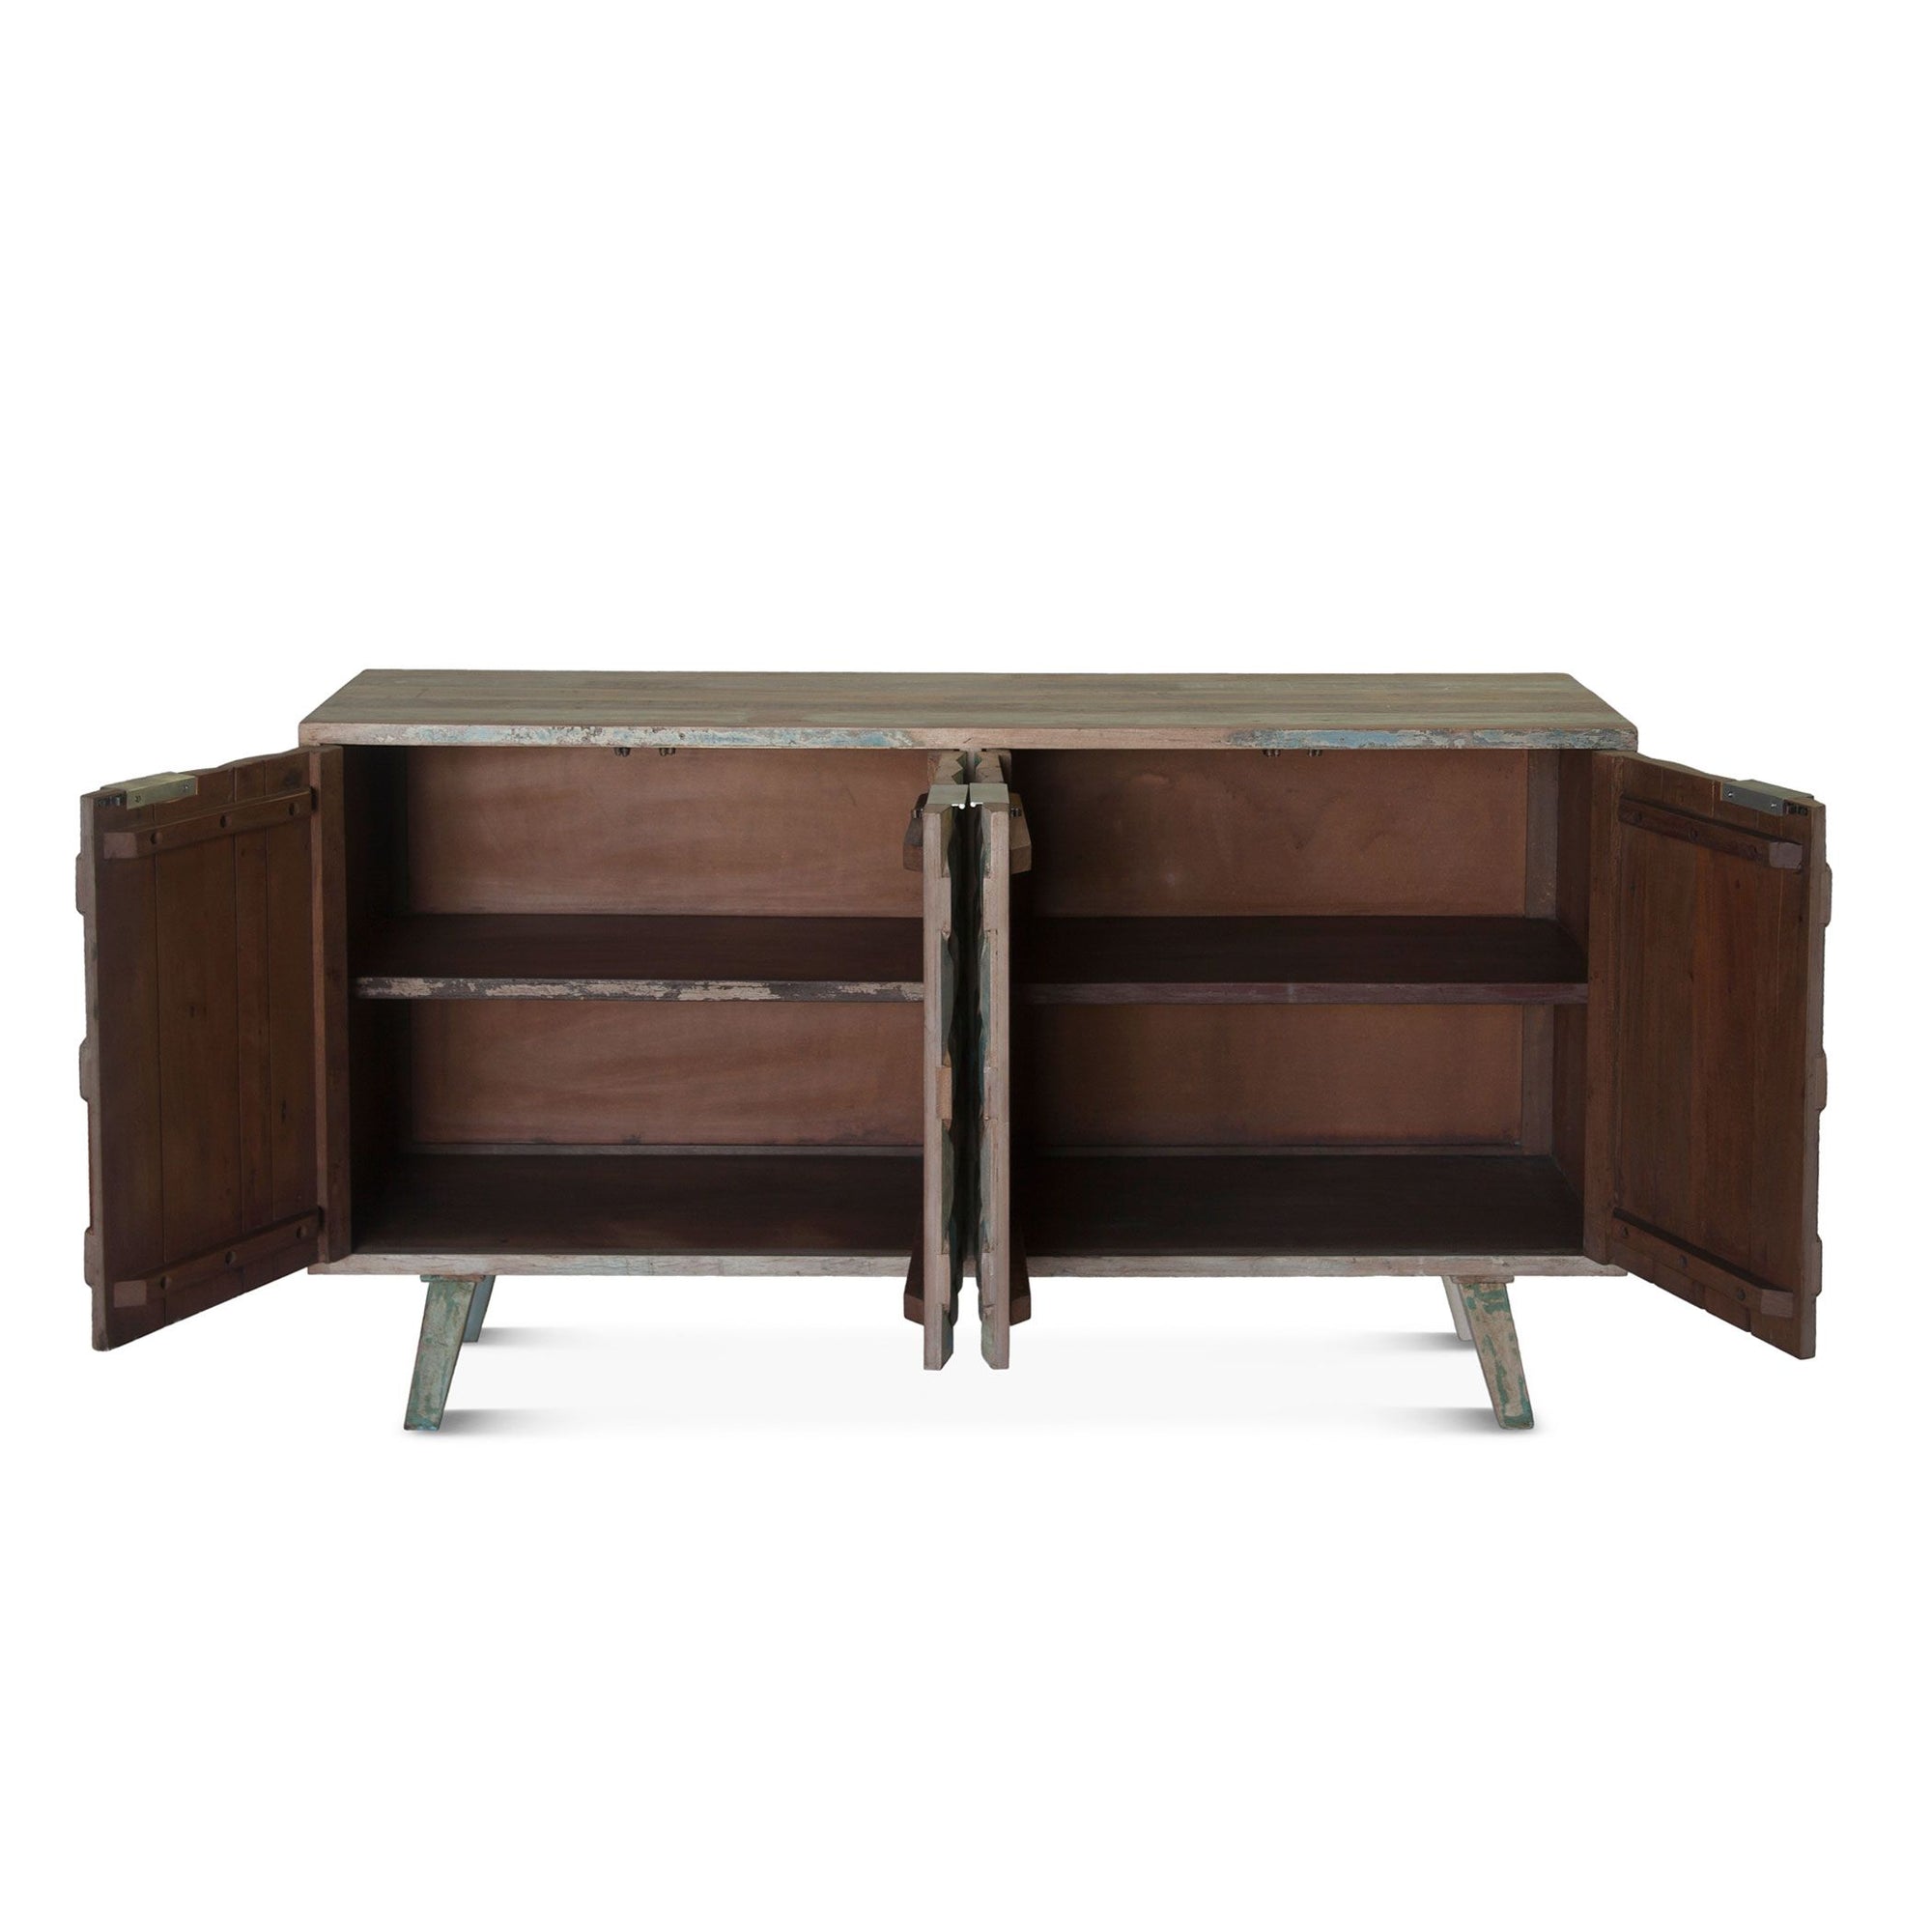 Reclaimed Vintage Teal Sideboard Buffet - Furniture on Main